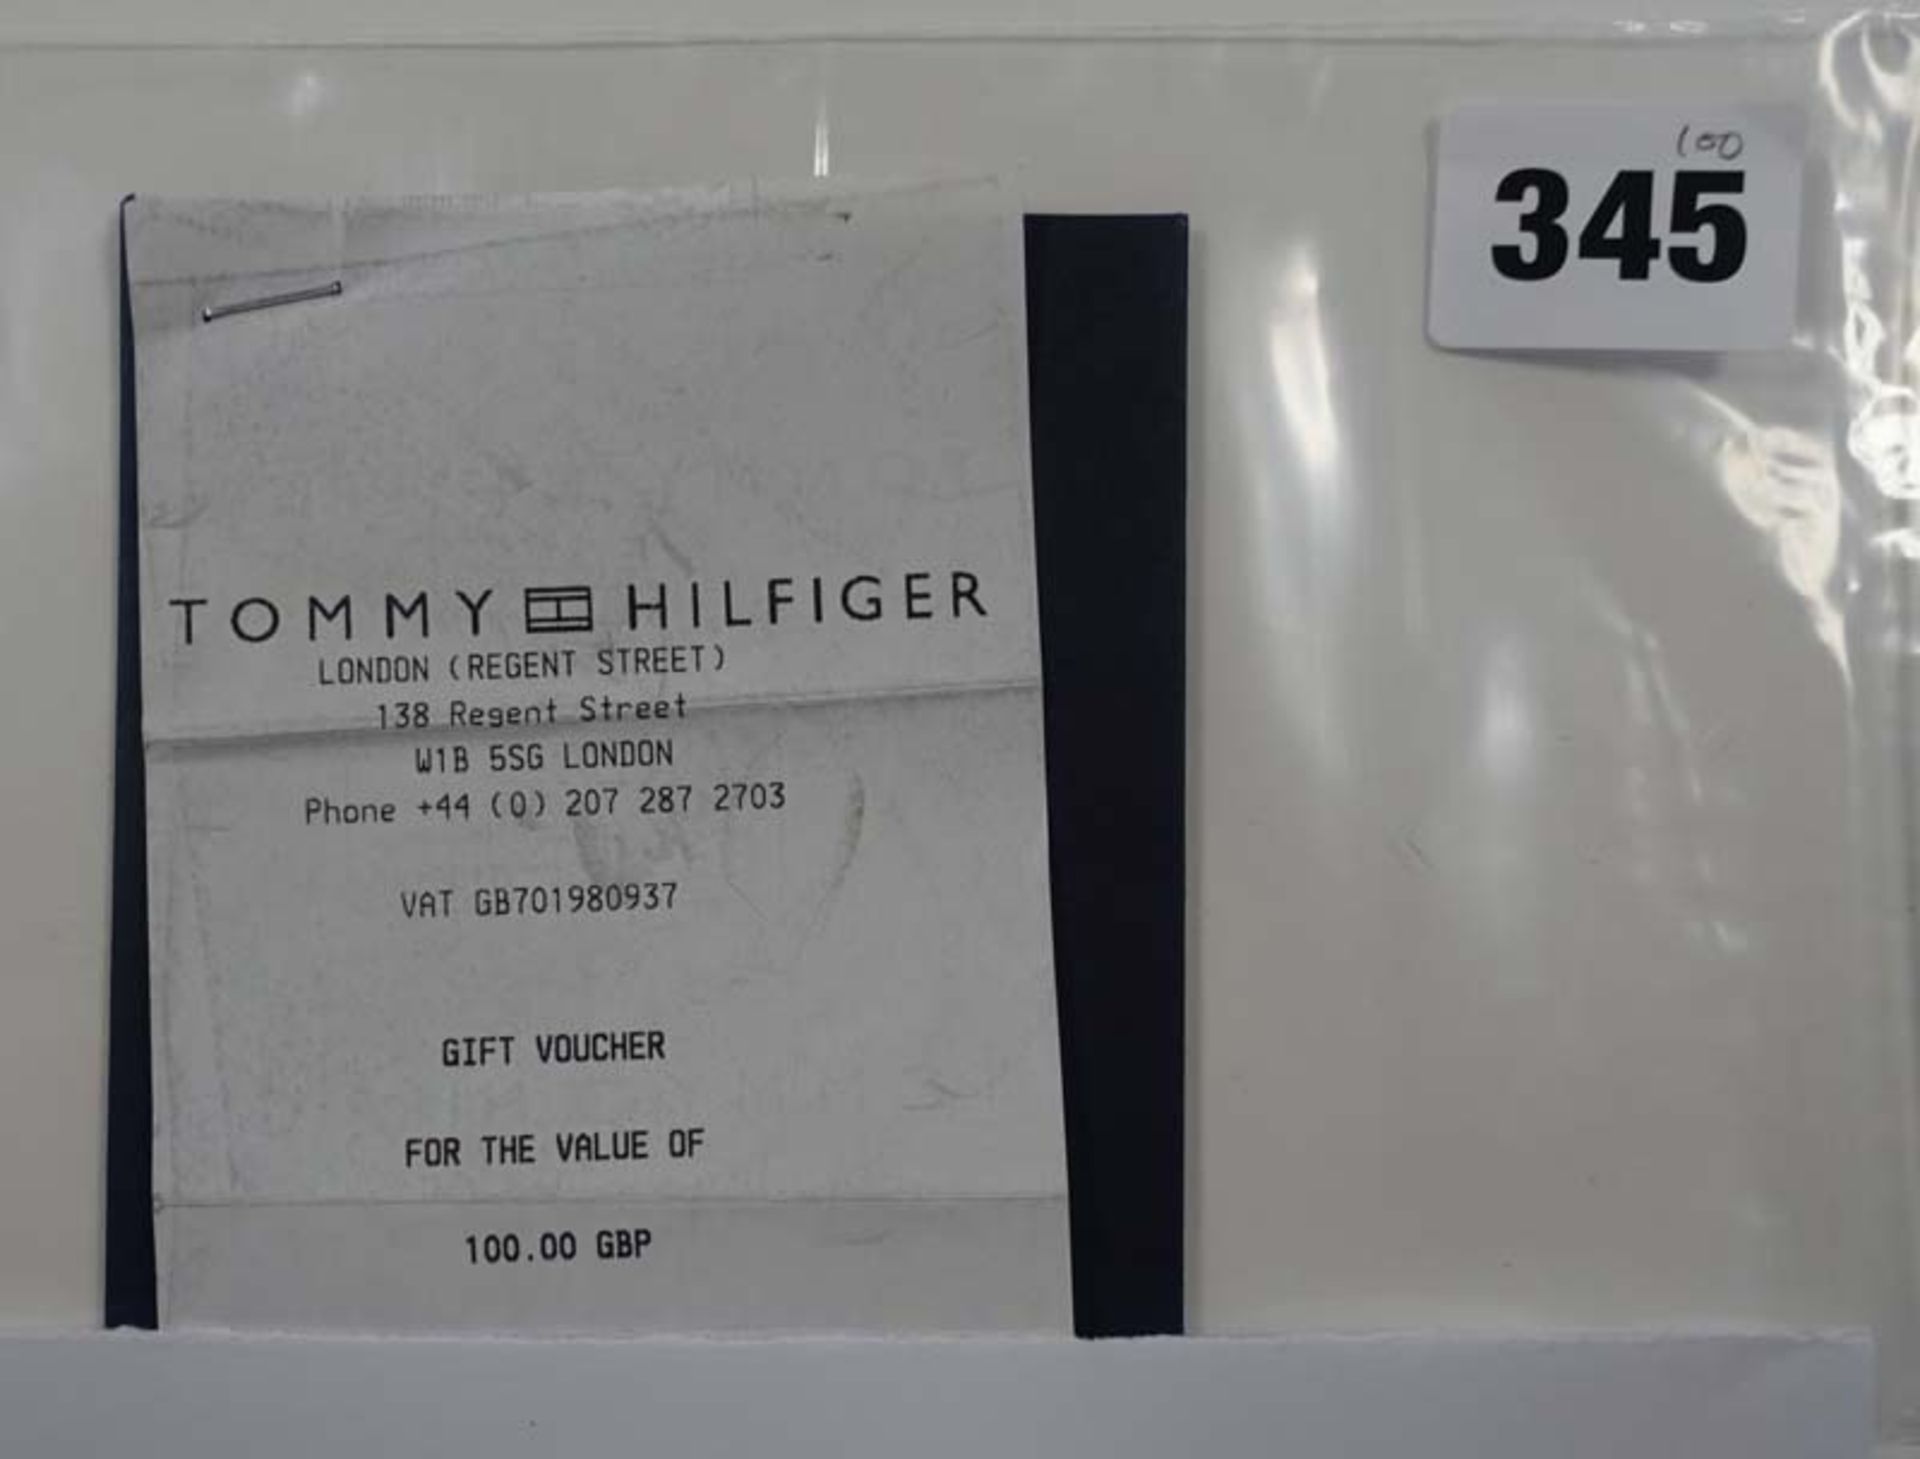 Tommy Hilfiger (x1) - Total face value £100